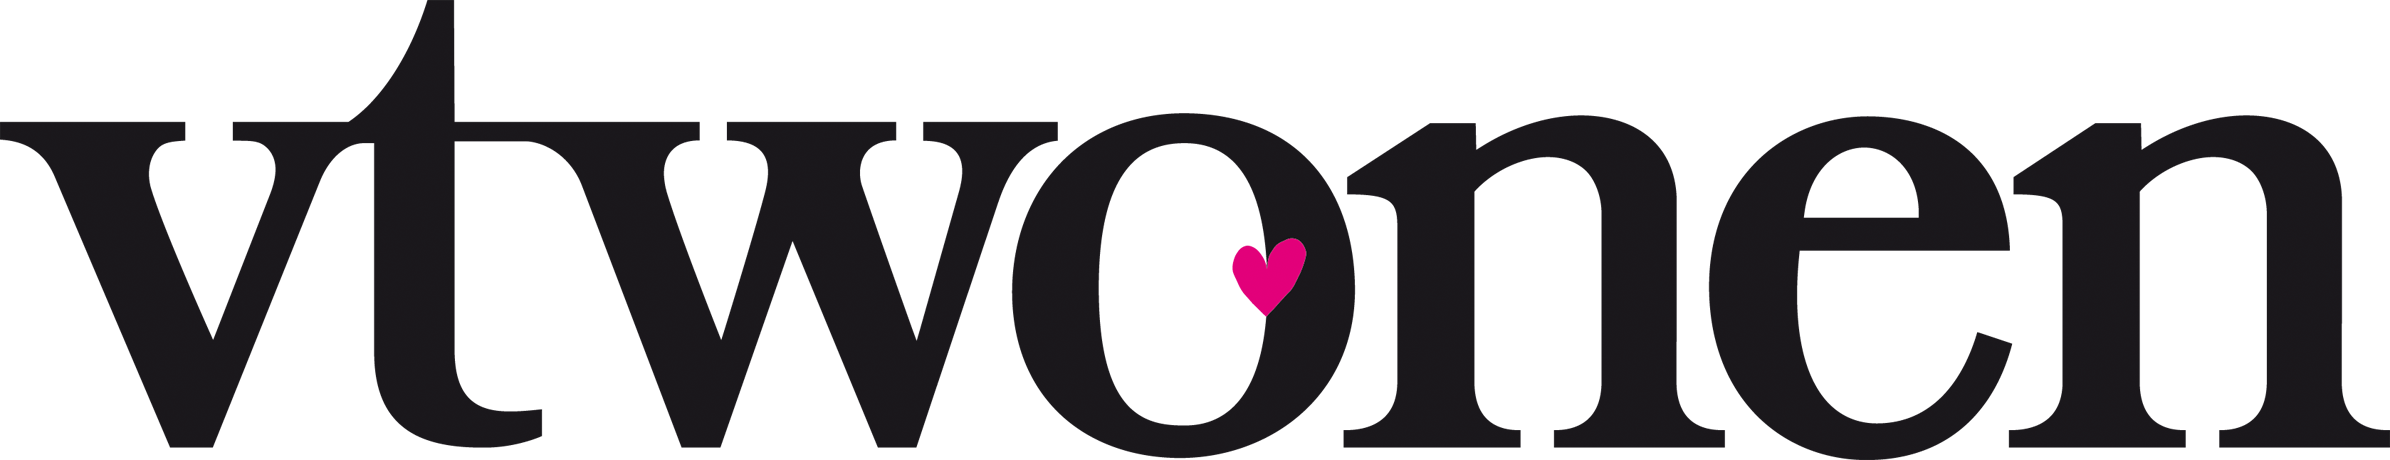 VT wonen logo